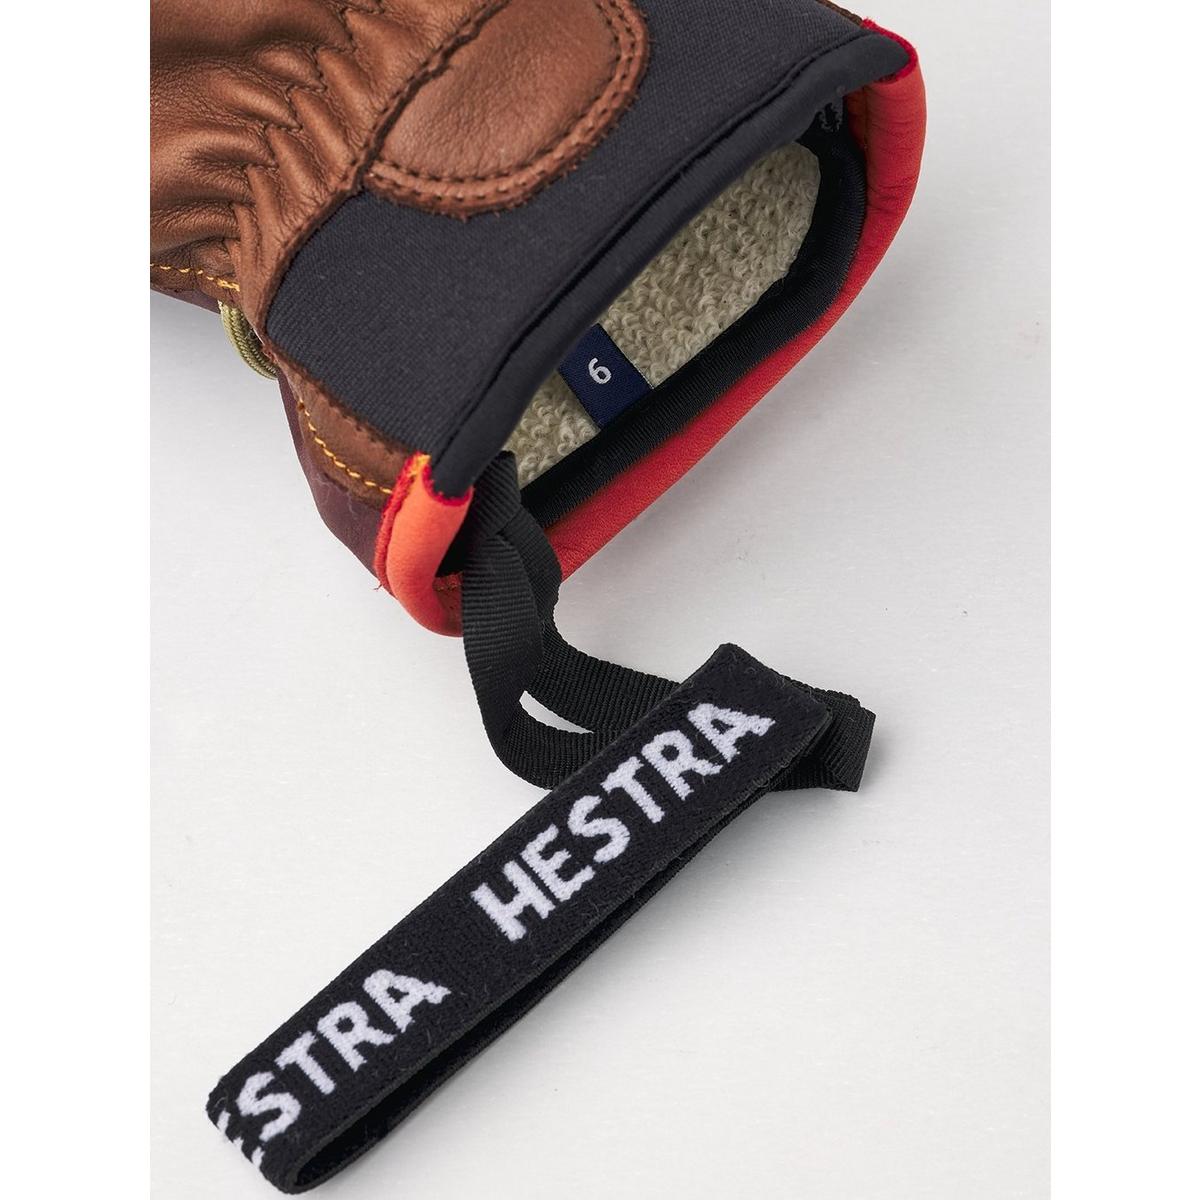 Hestra Men's Hestra Wakayama Glove - Bordeaux/Brown